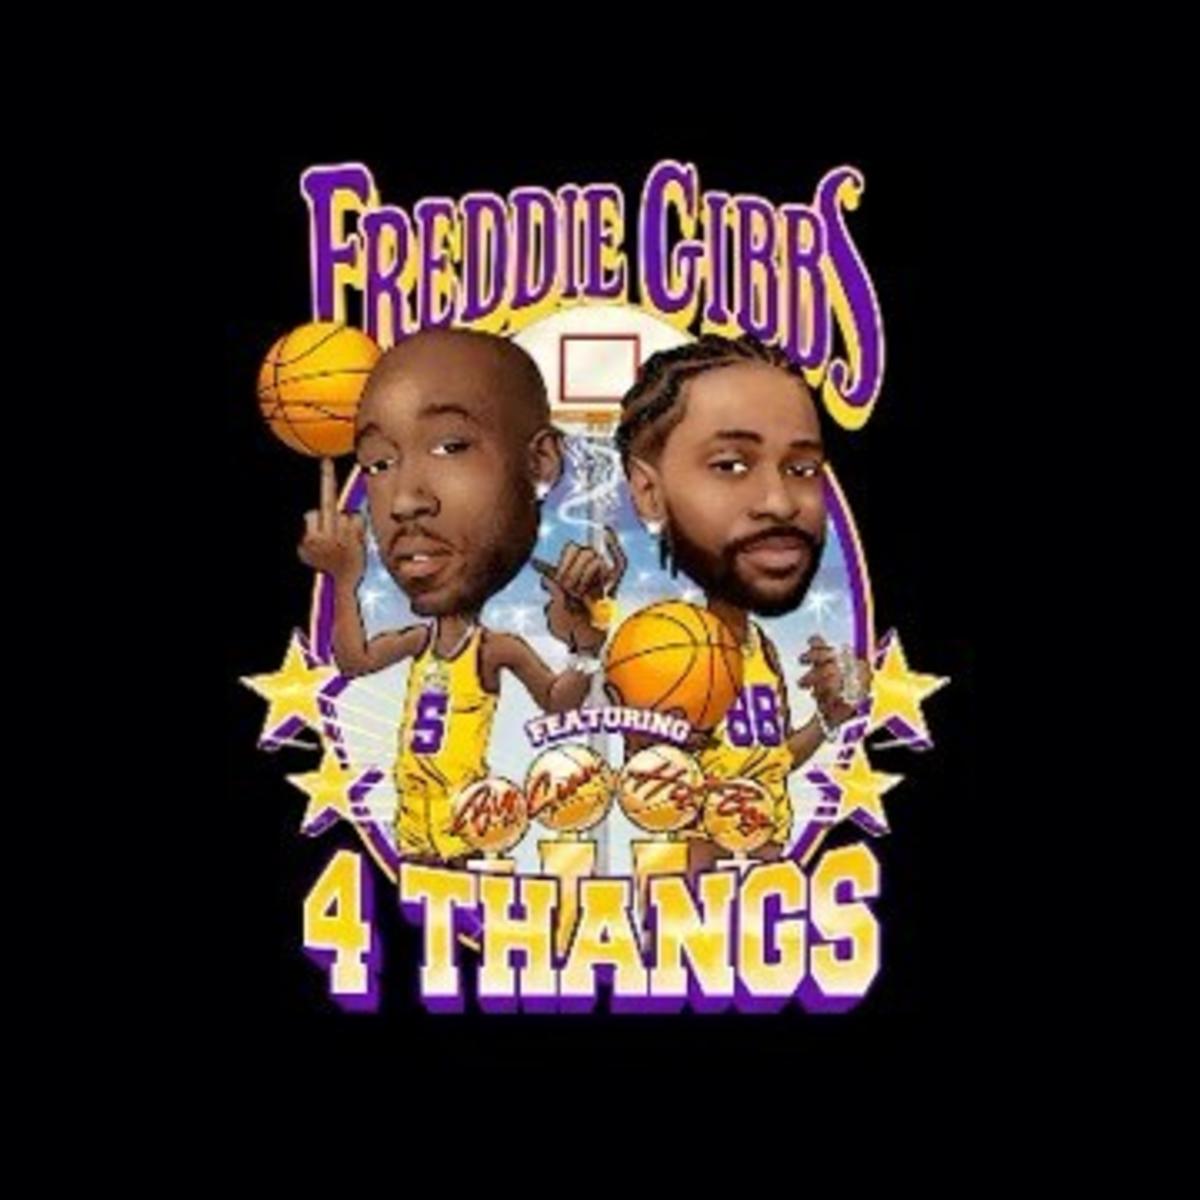 Freddie Gibbs & Big Sean Trade Bars On “4 Thangs”